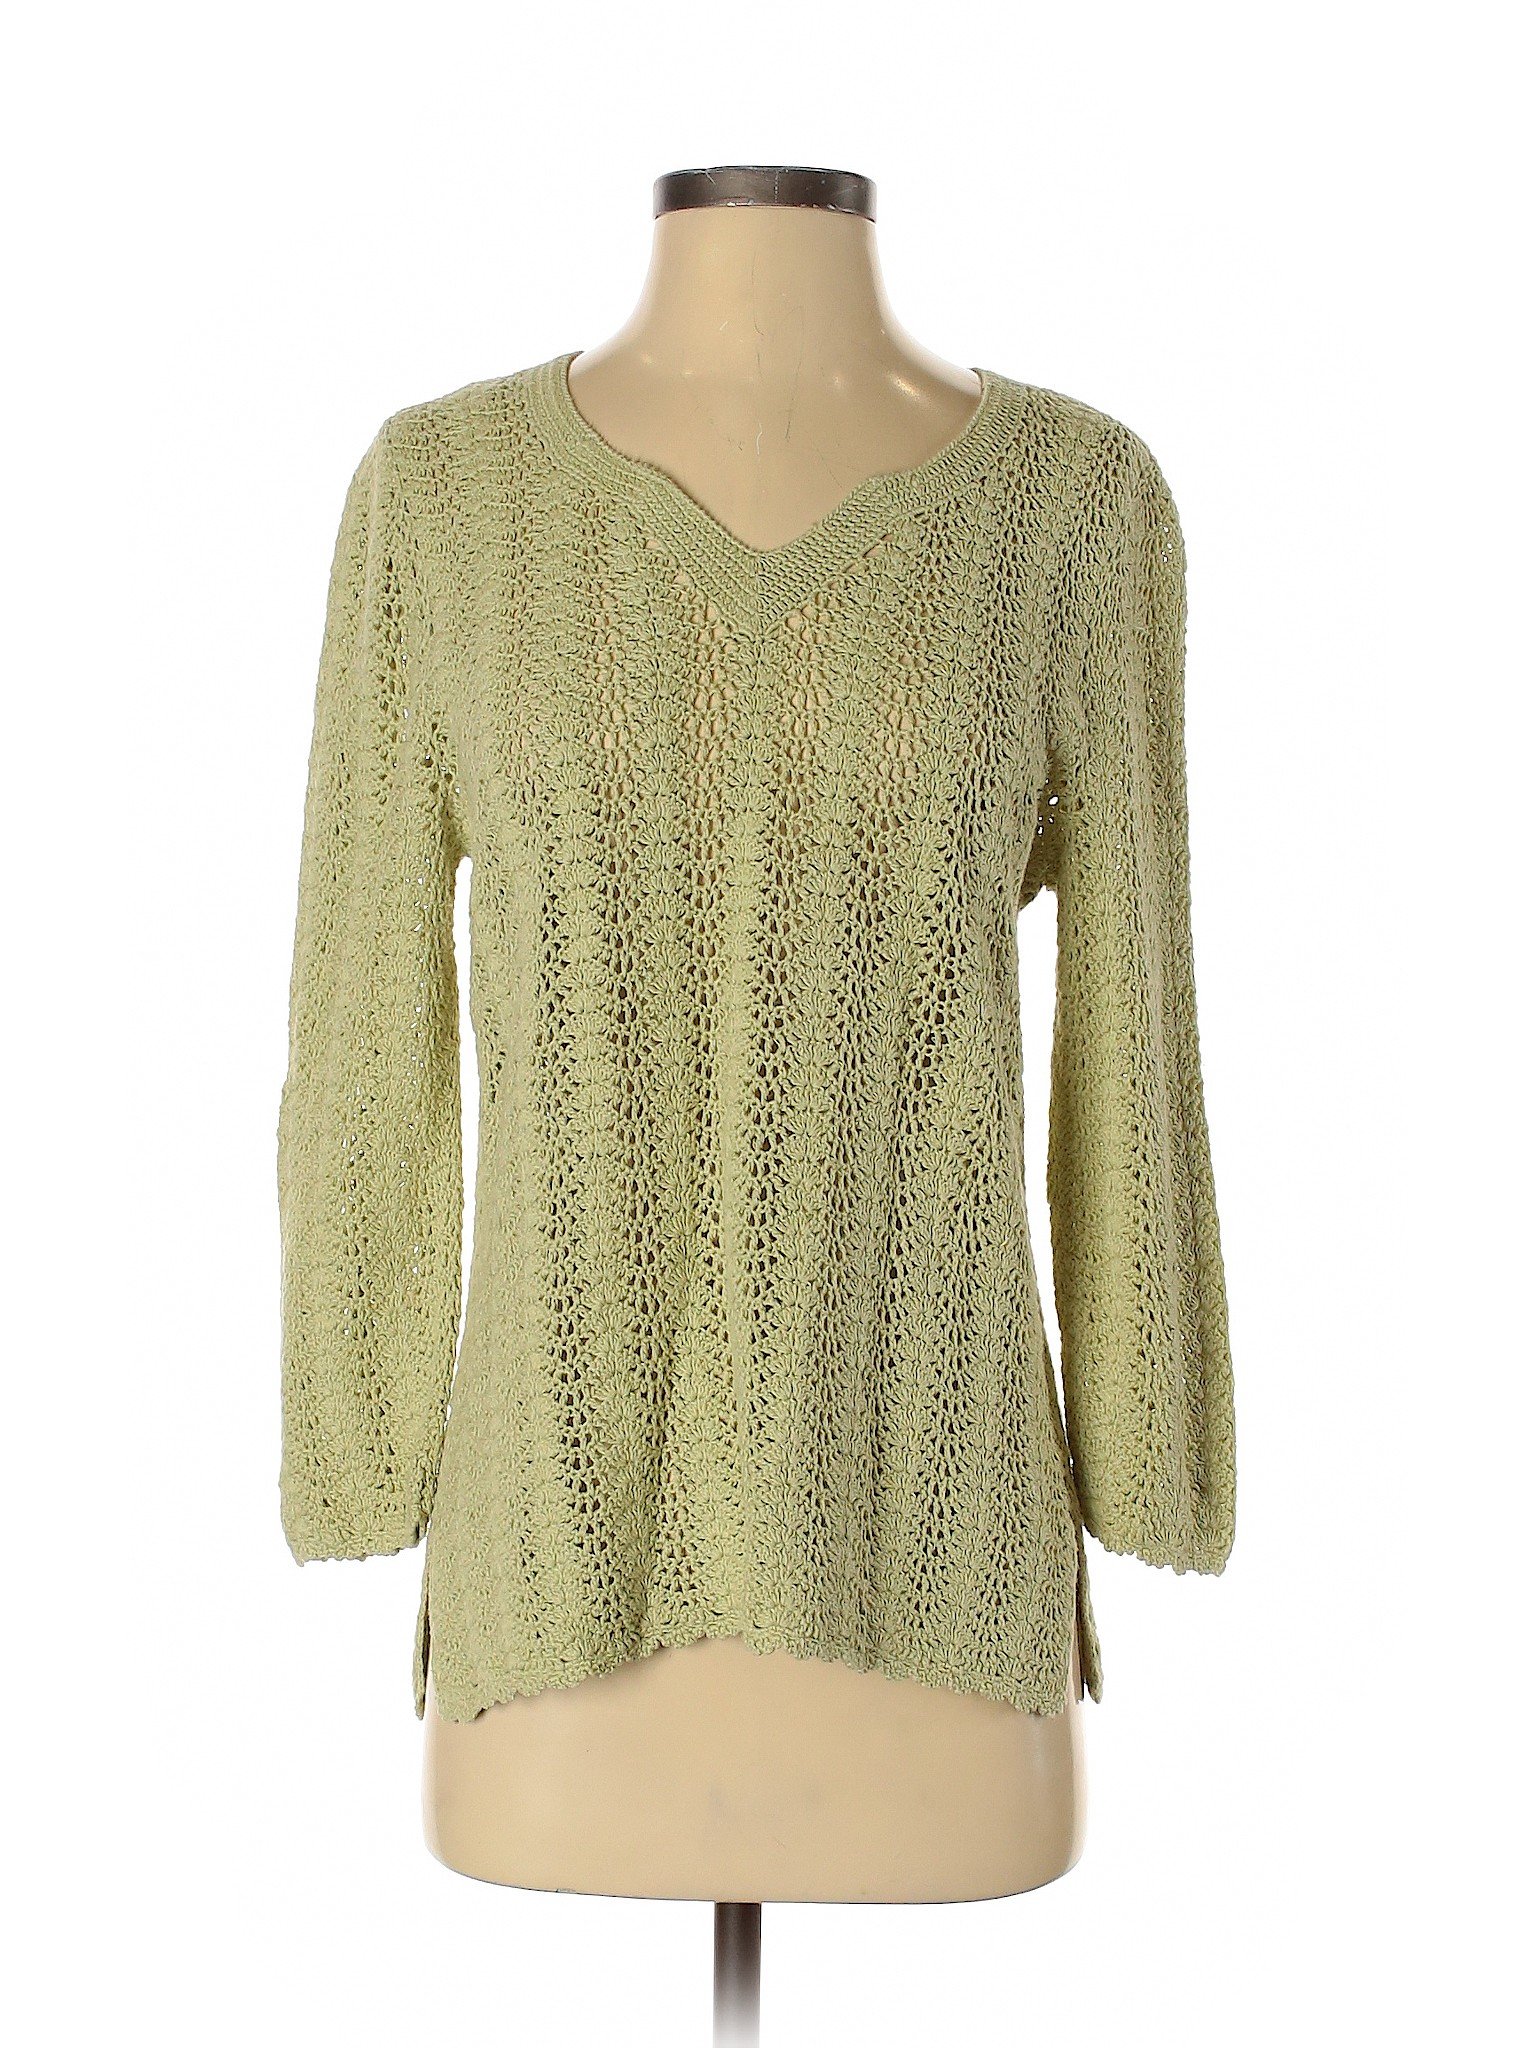 Kate Hill Women Green Pullover Sweater M | eBay